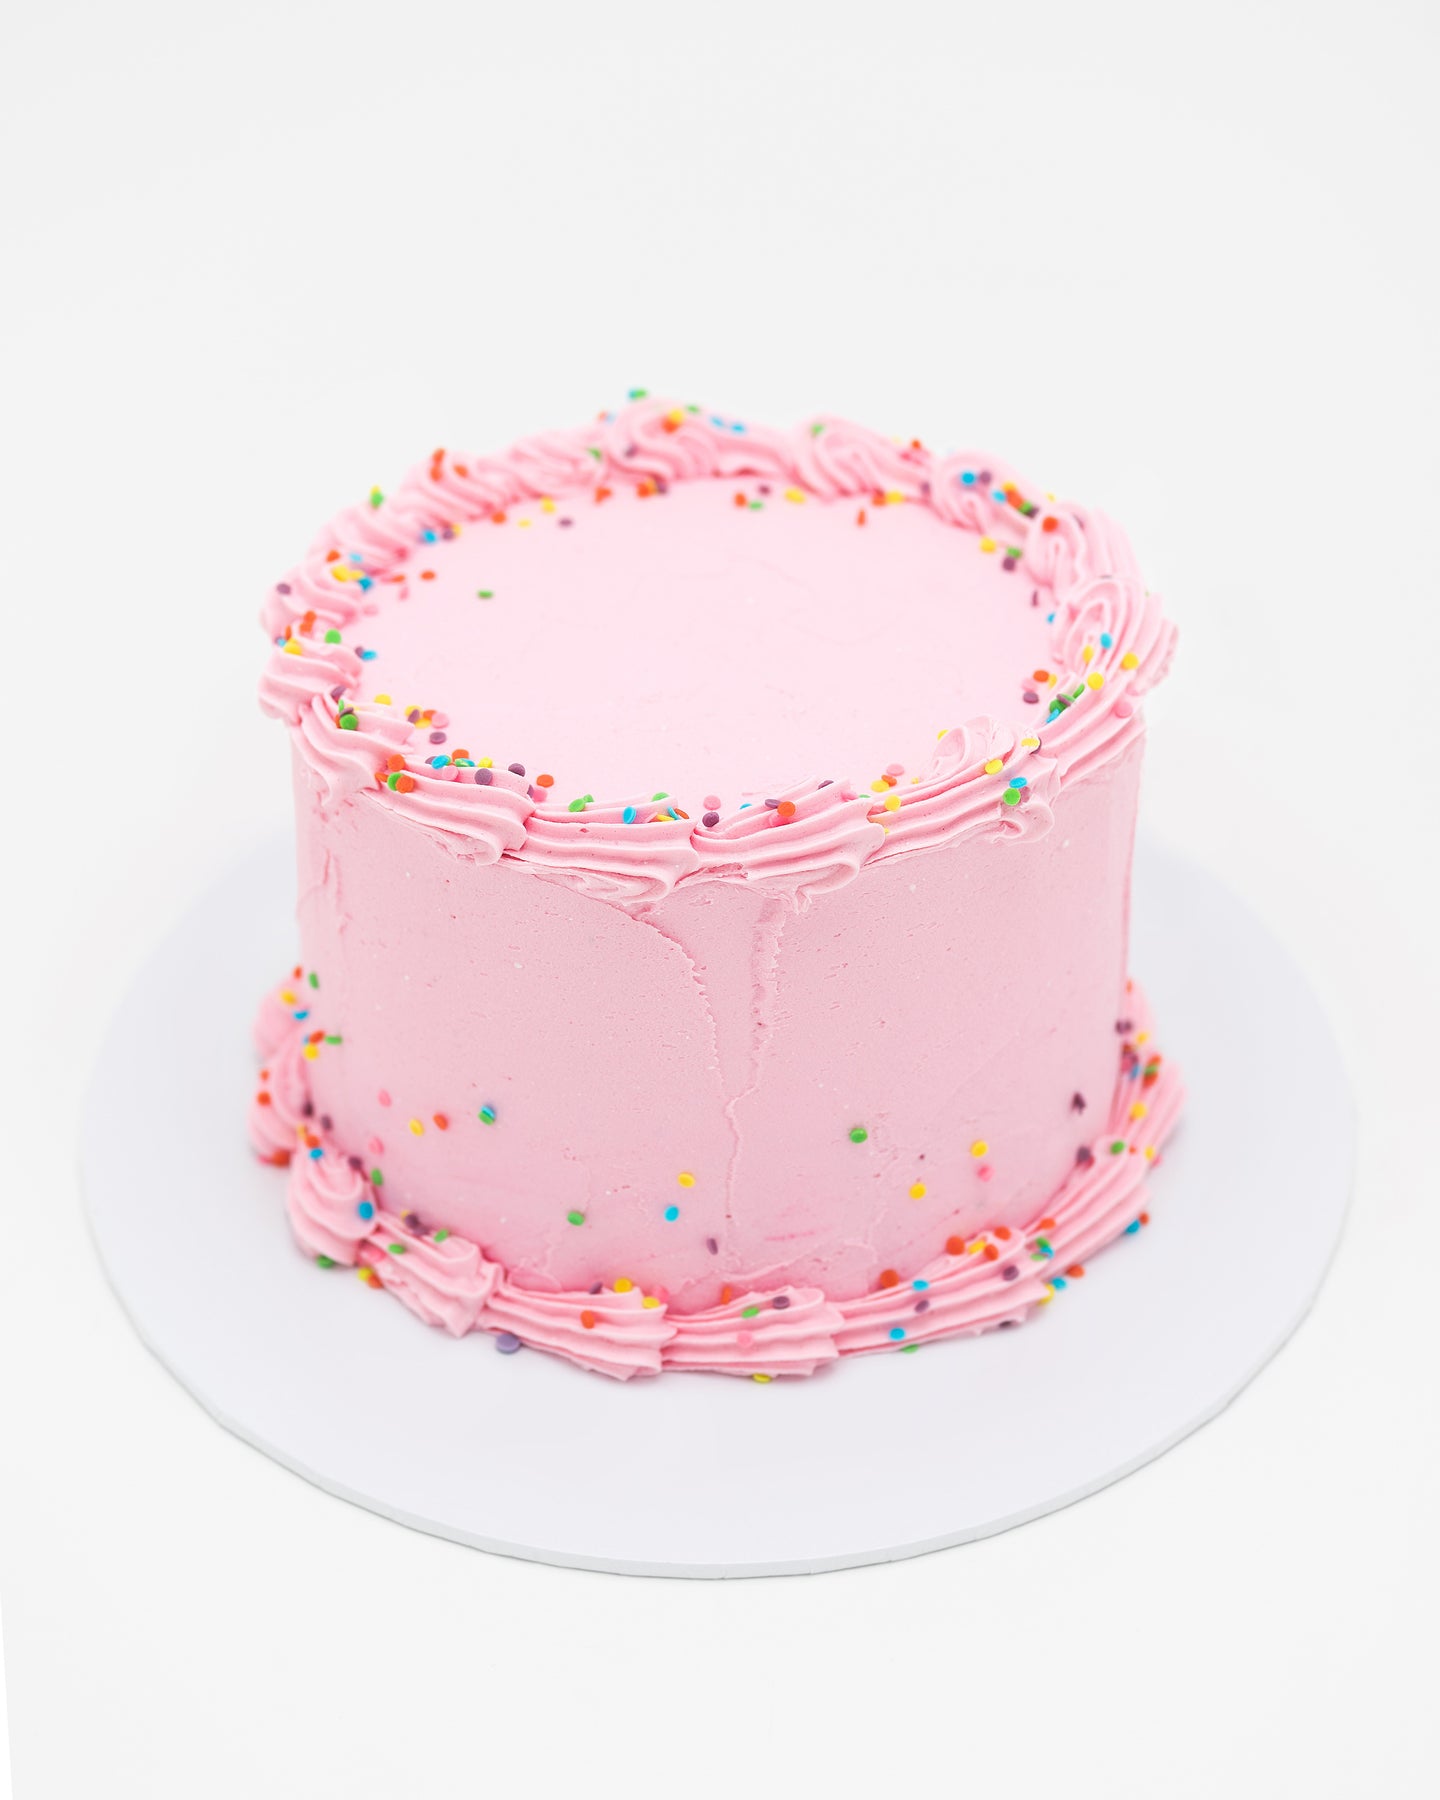 6 inch Sprinkles Birthday Cake - The Kiwi Country Girl